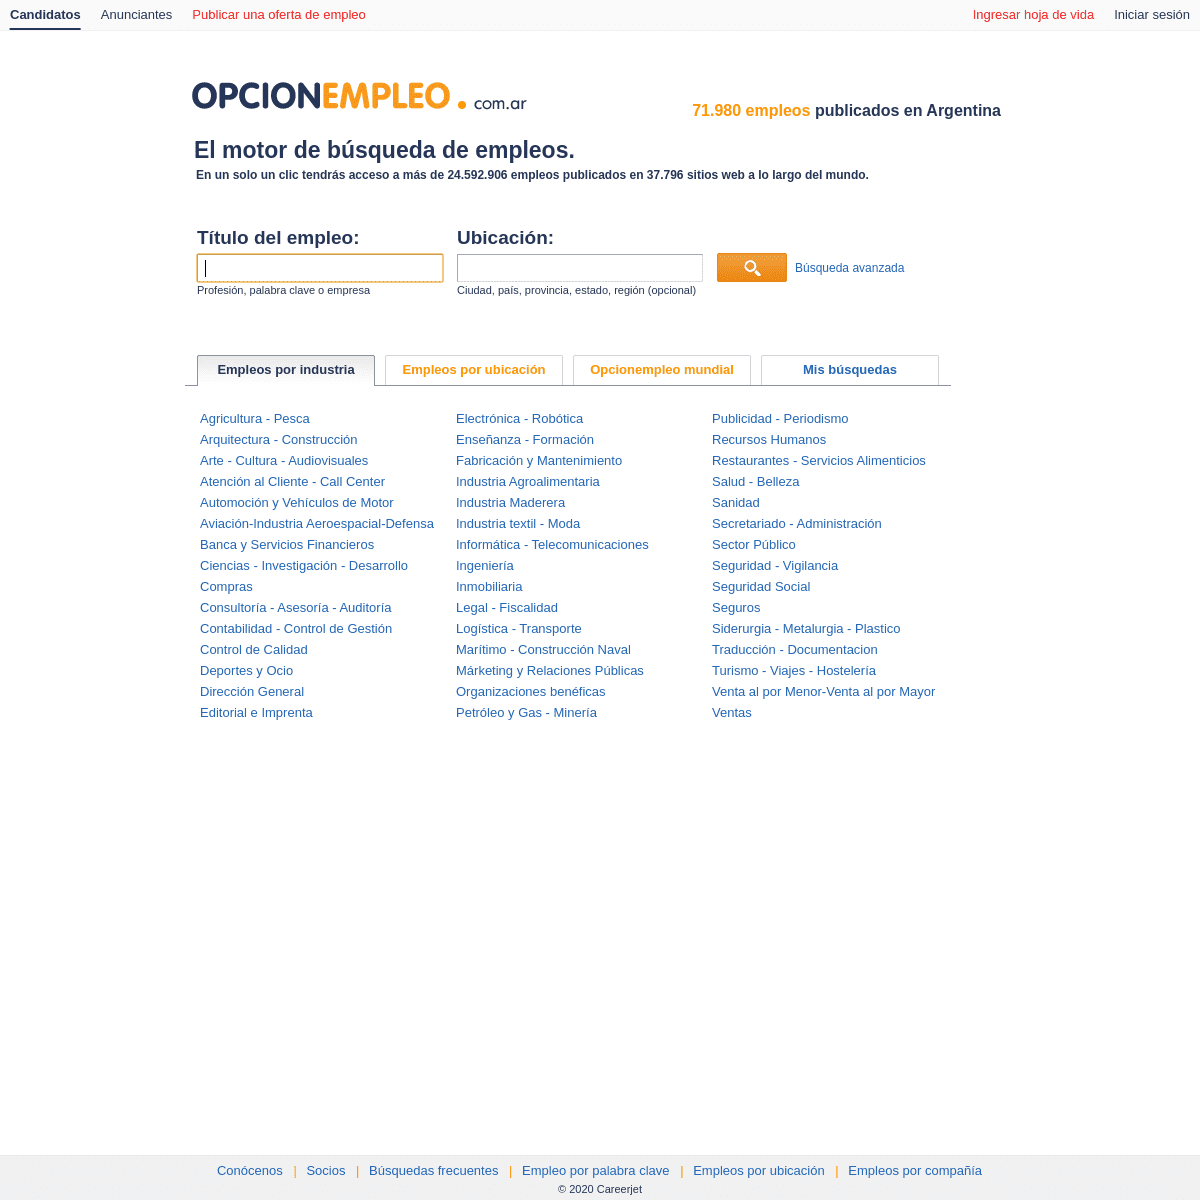 A complete backup of opcionempleo.com.ar